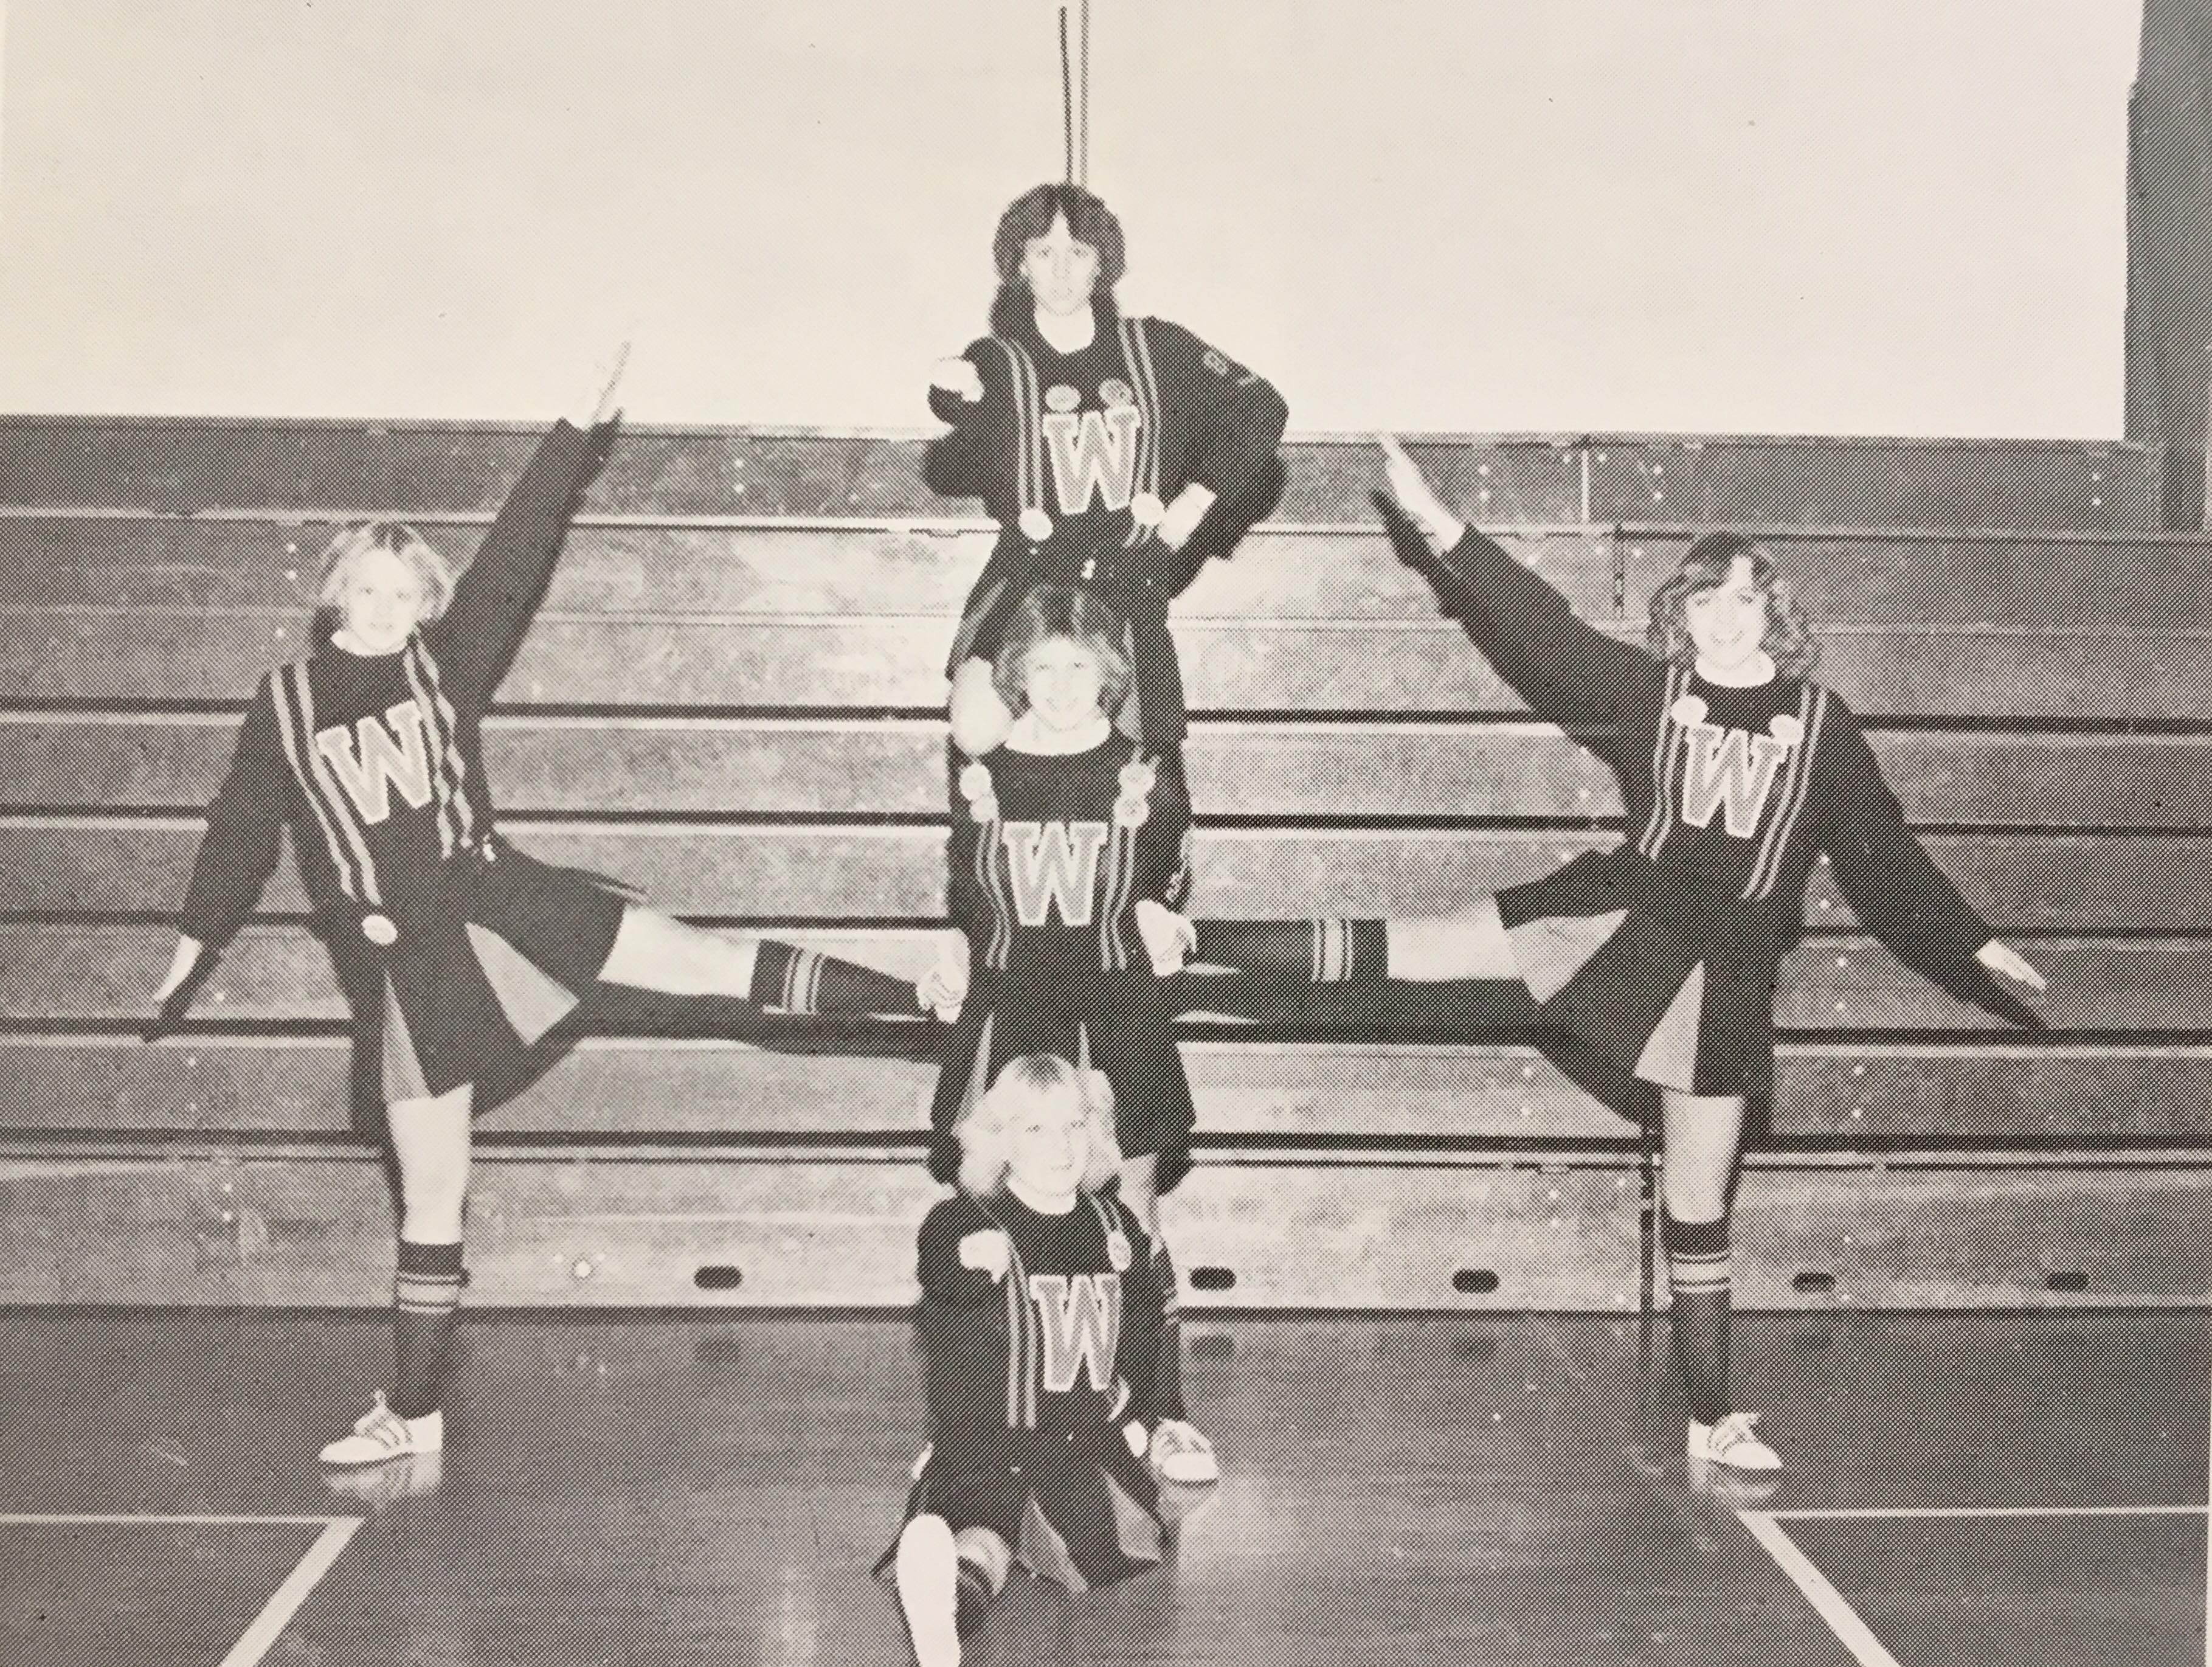 1979-1980 Cheerleaders: Left is Rhonda Berg, top center is Edna Steinke, middle center is Karen Faldet, bottom center is Liza Guse, and to the right is Brenda Hanevold.